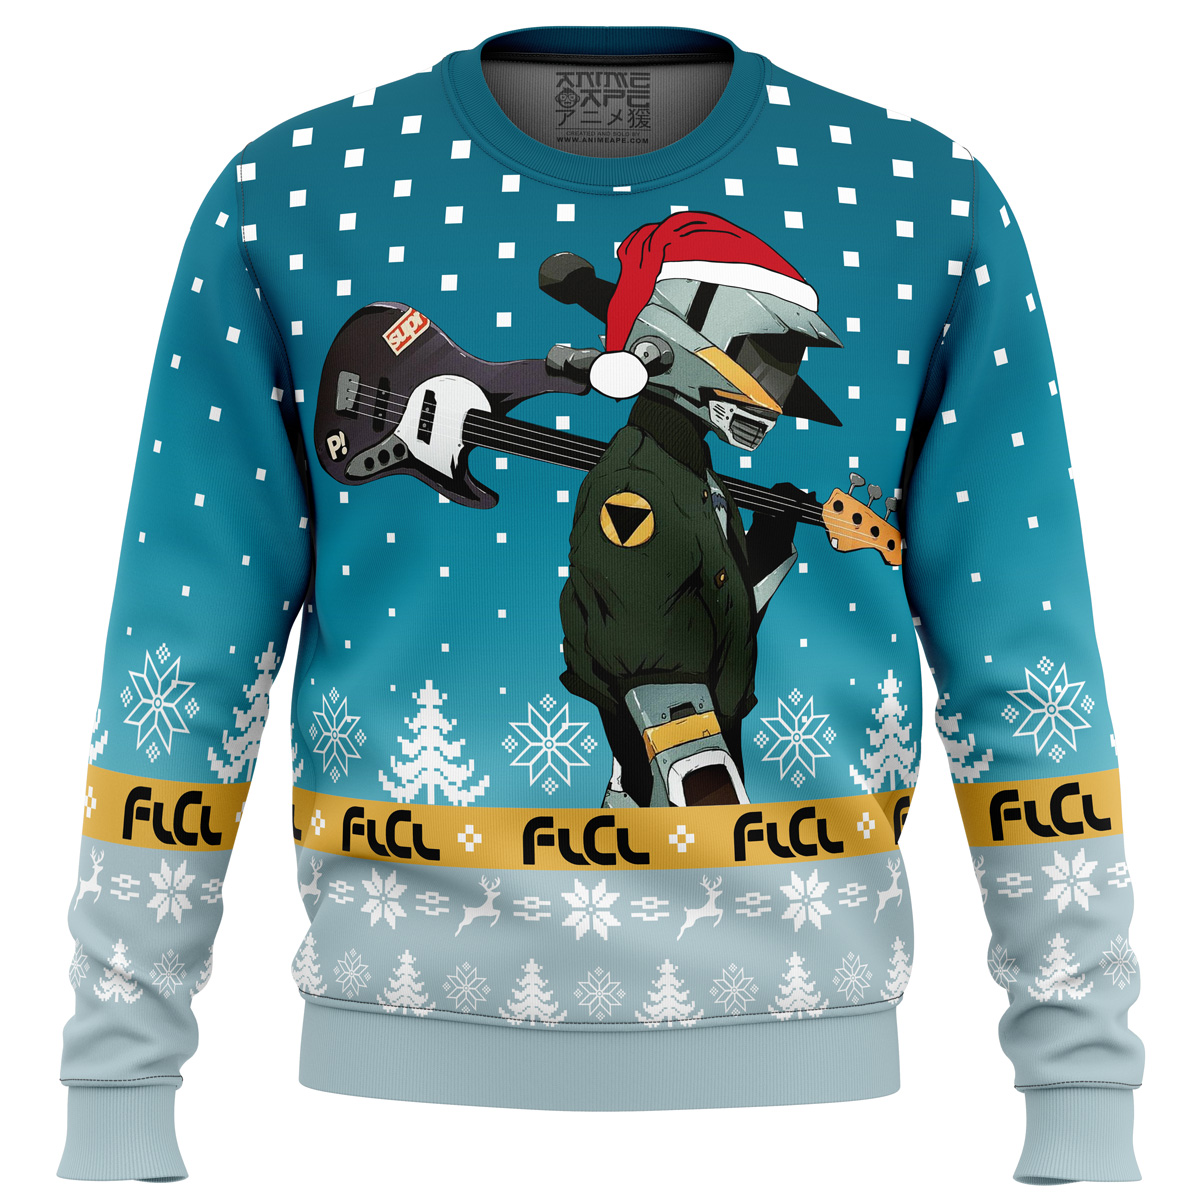 flcl canti saw christmas tree ugly christmas sweater ana2207 5789 - Fandomaniax Store